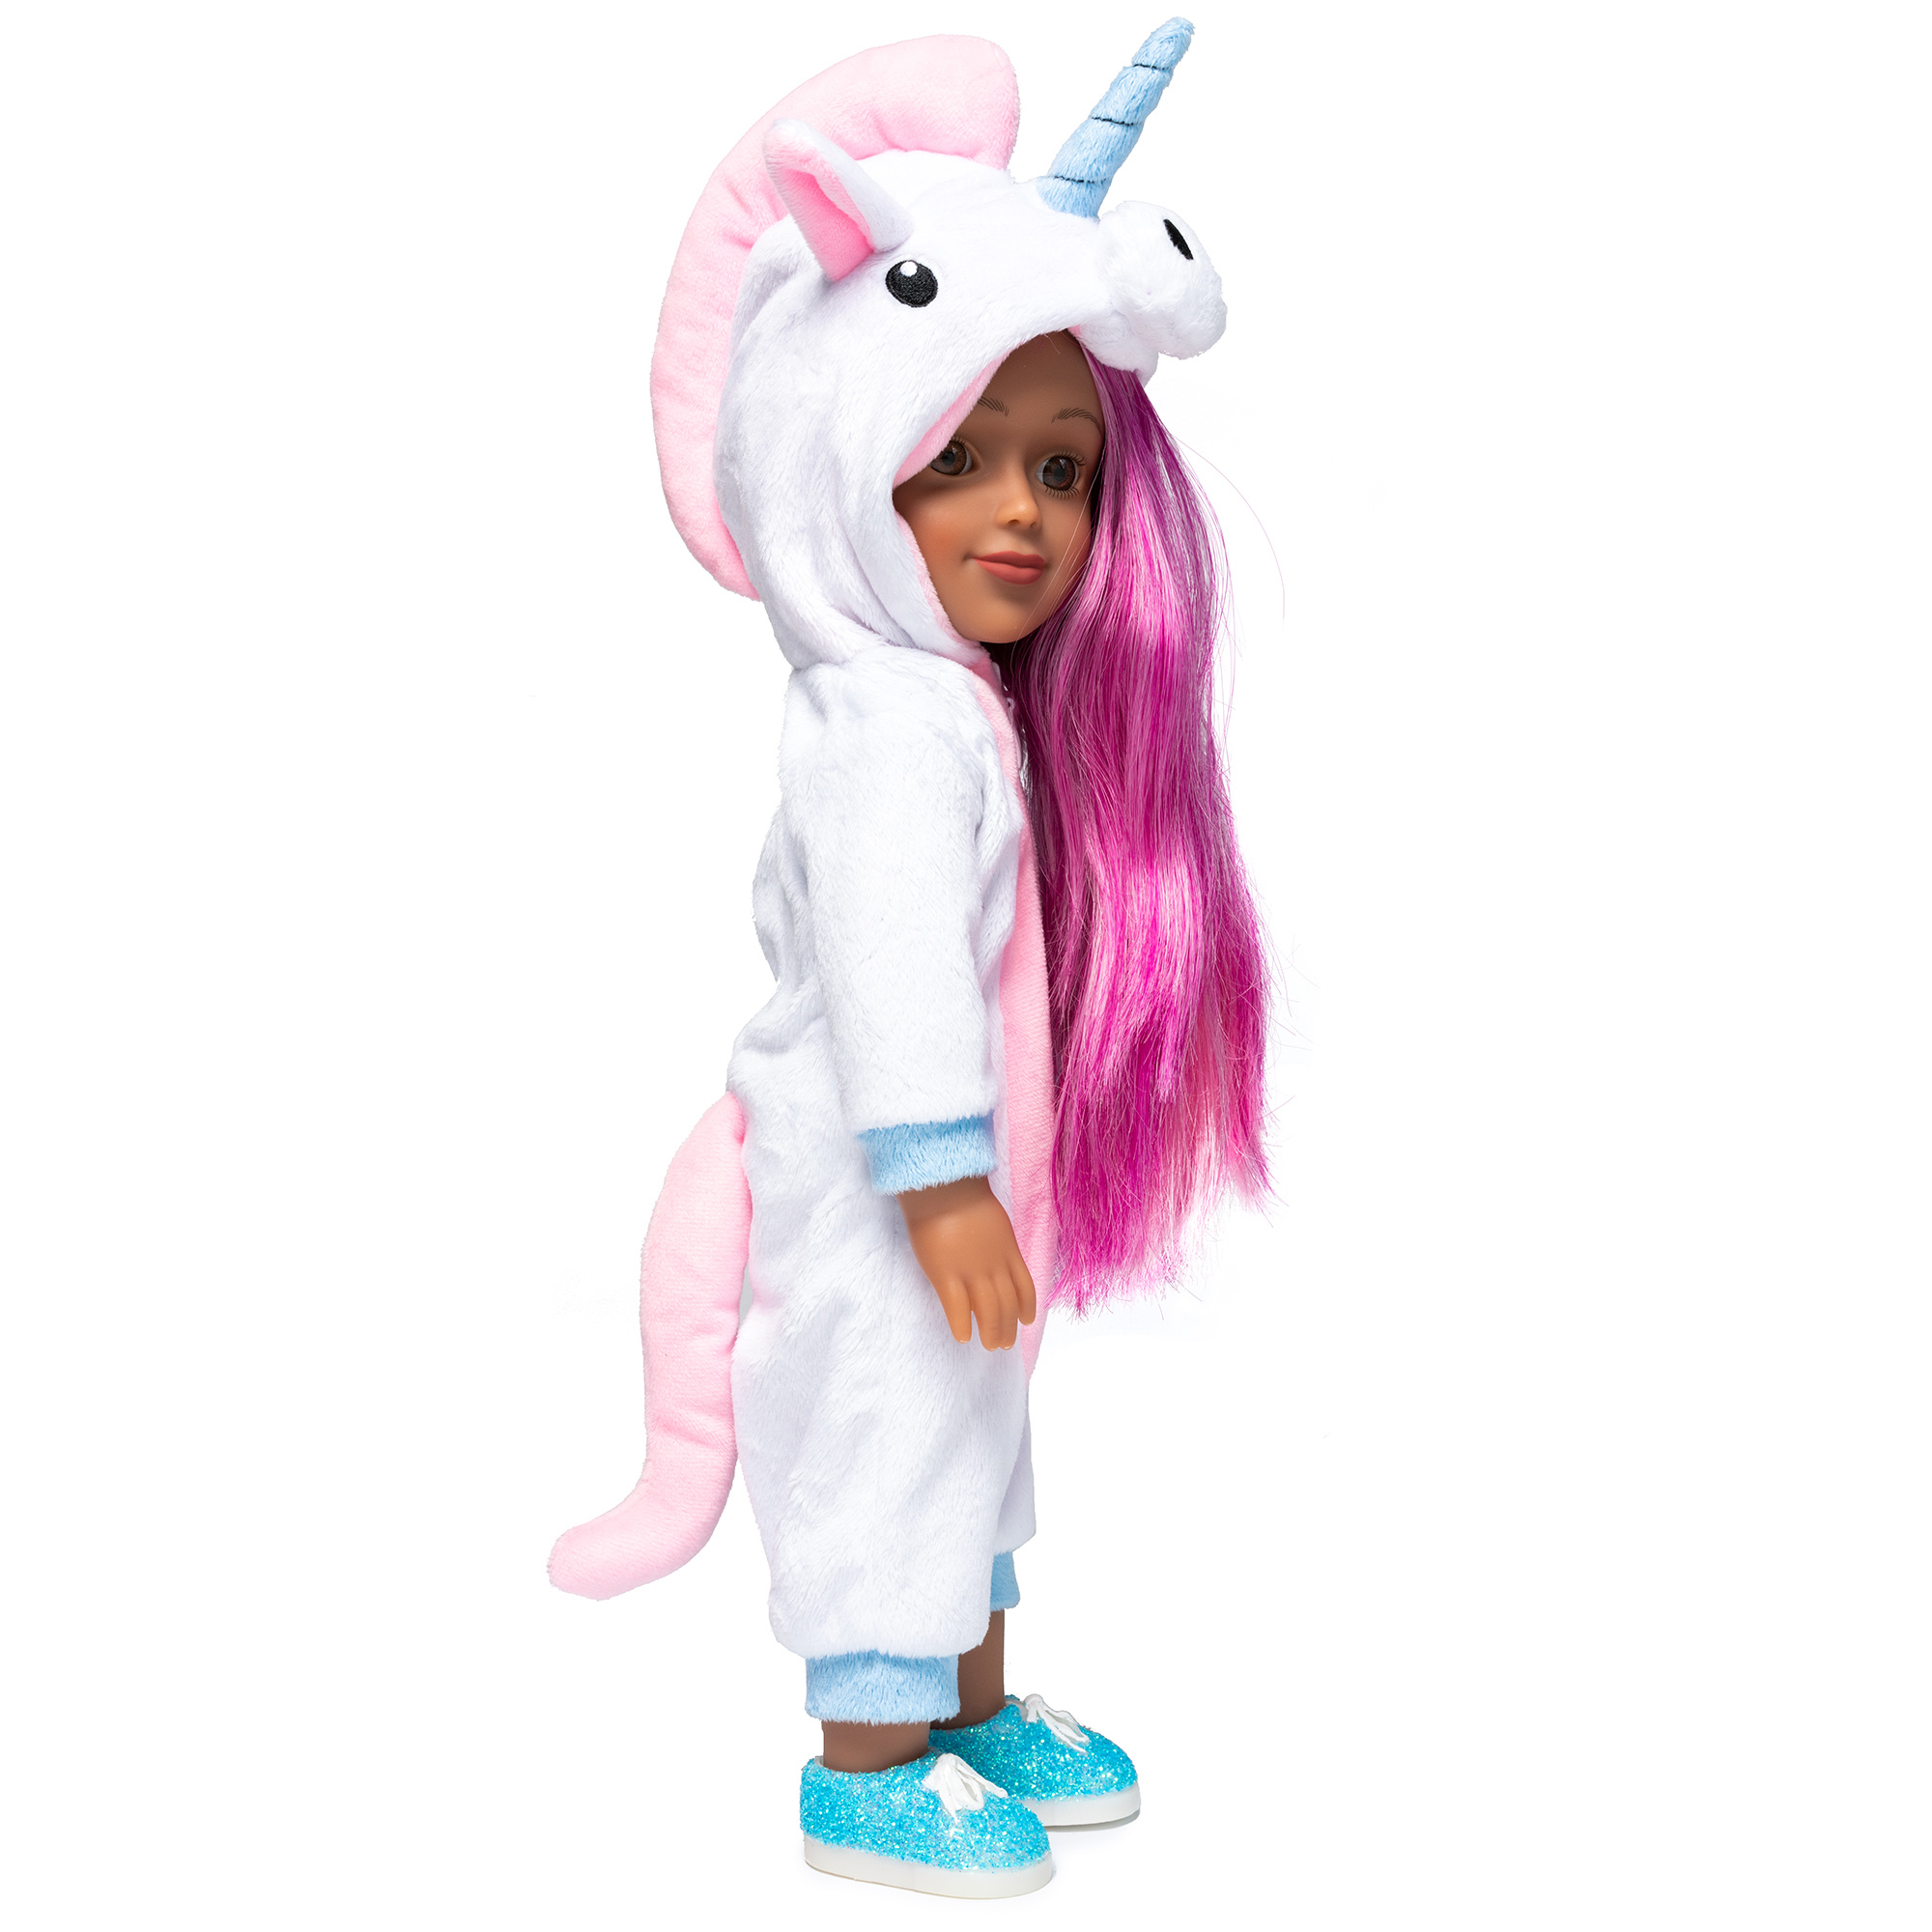 Bambola i'm a wow sophia the unicorn 35 cm - I'm a Girly